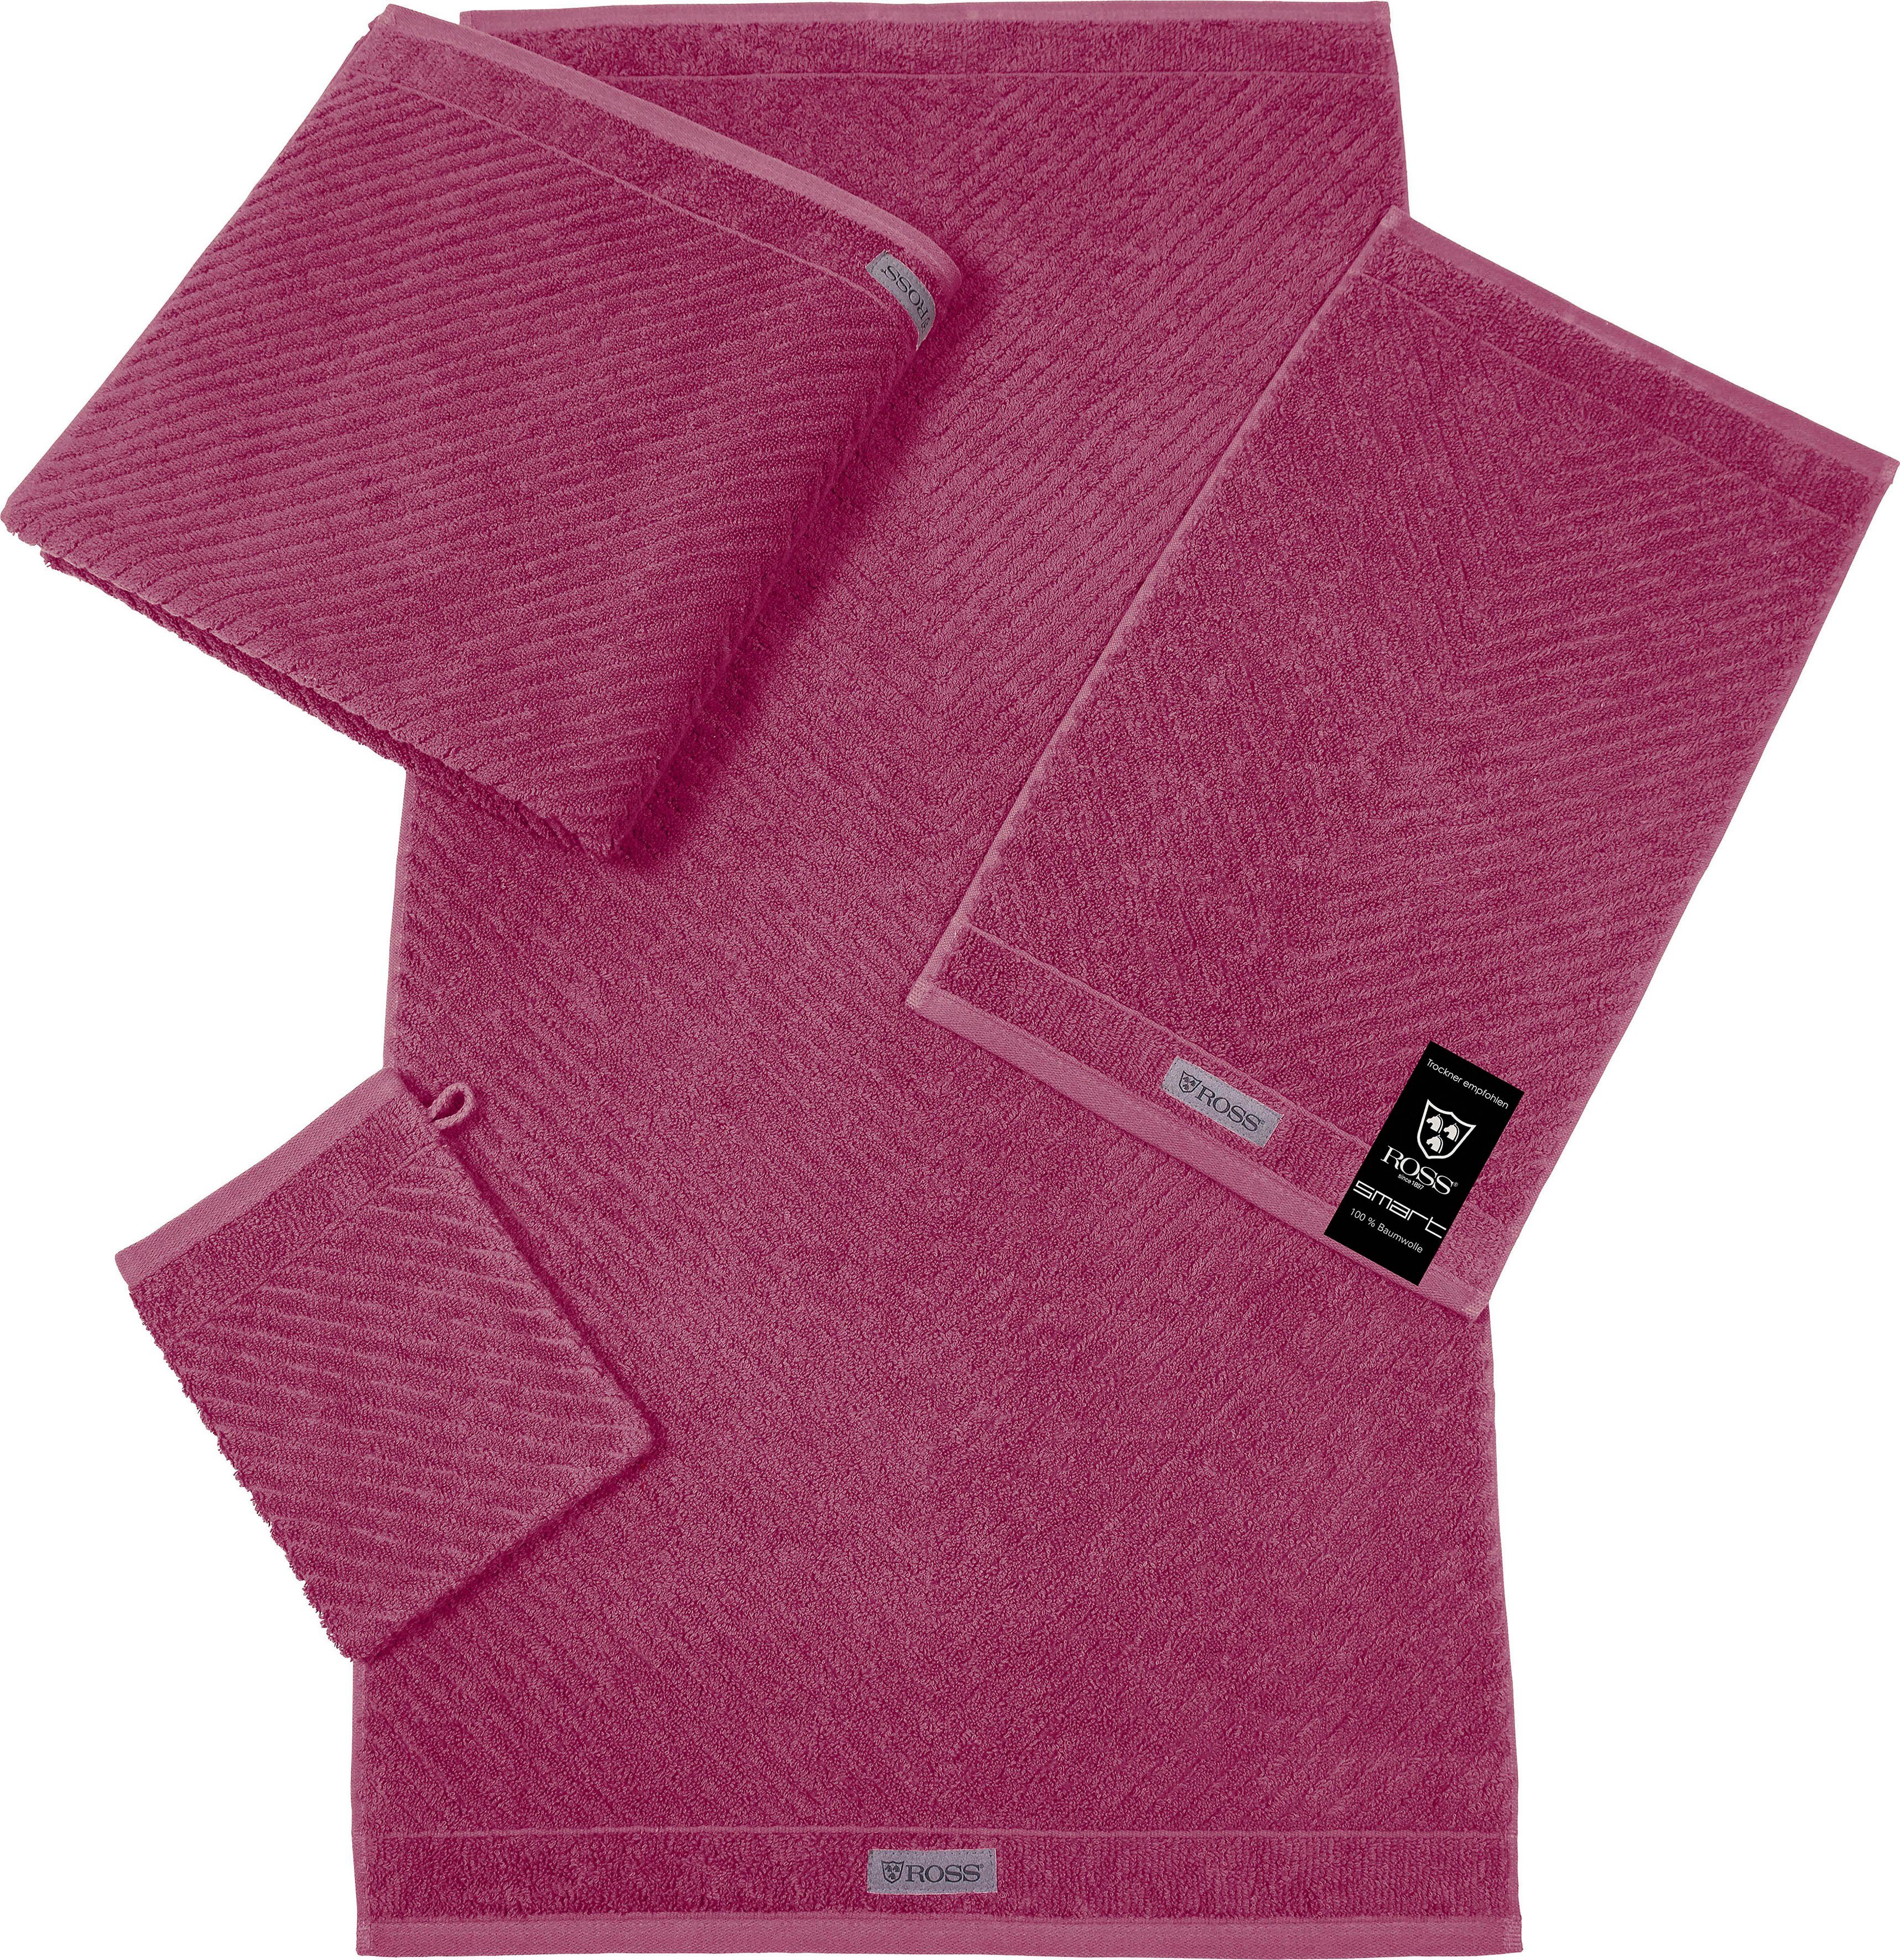 ROSS Handtücher online kaufen OTTO |